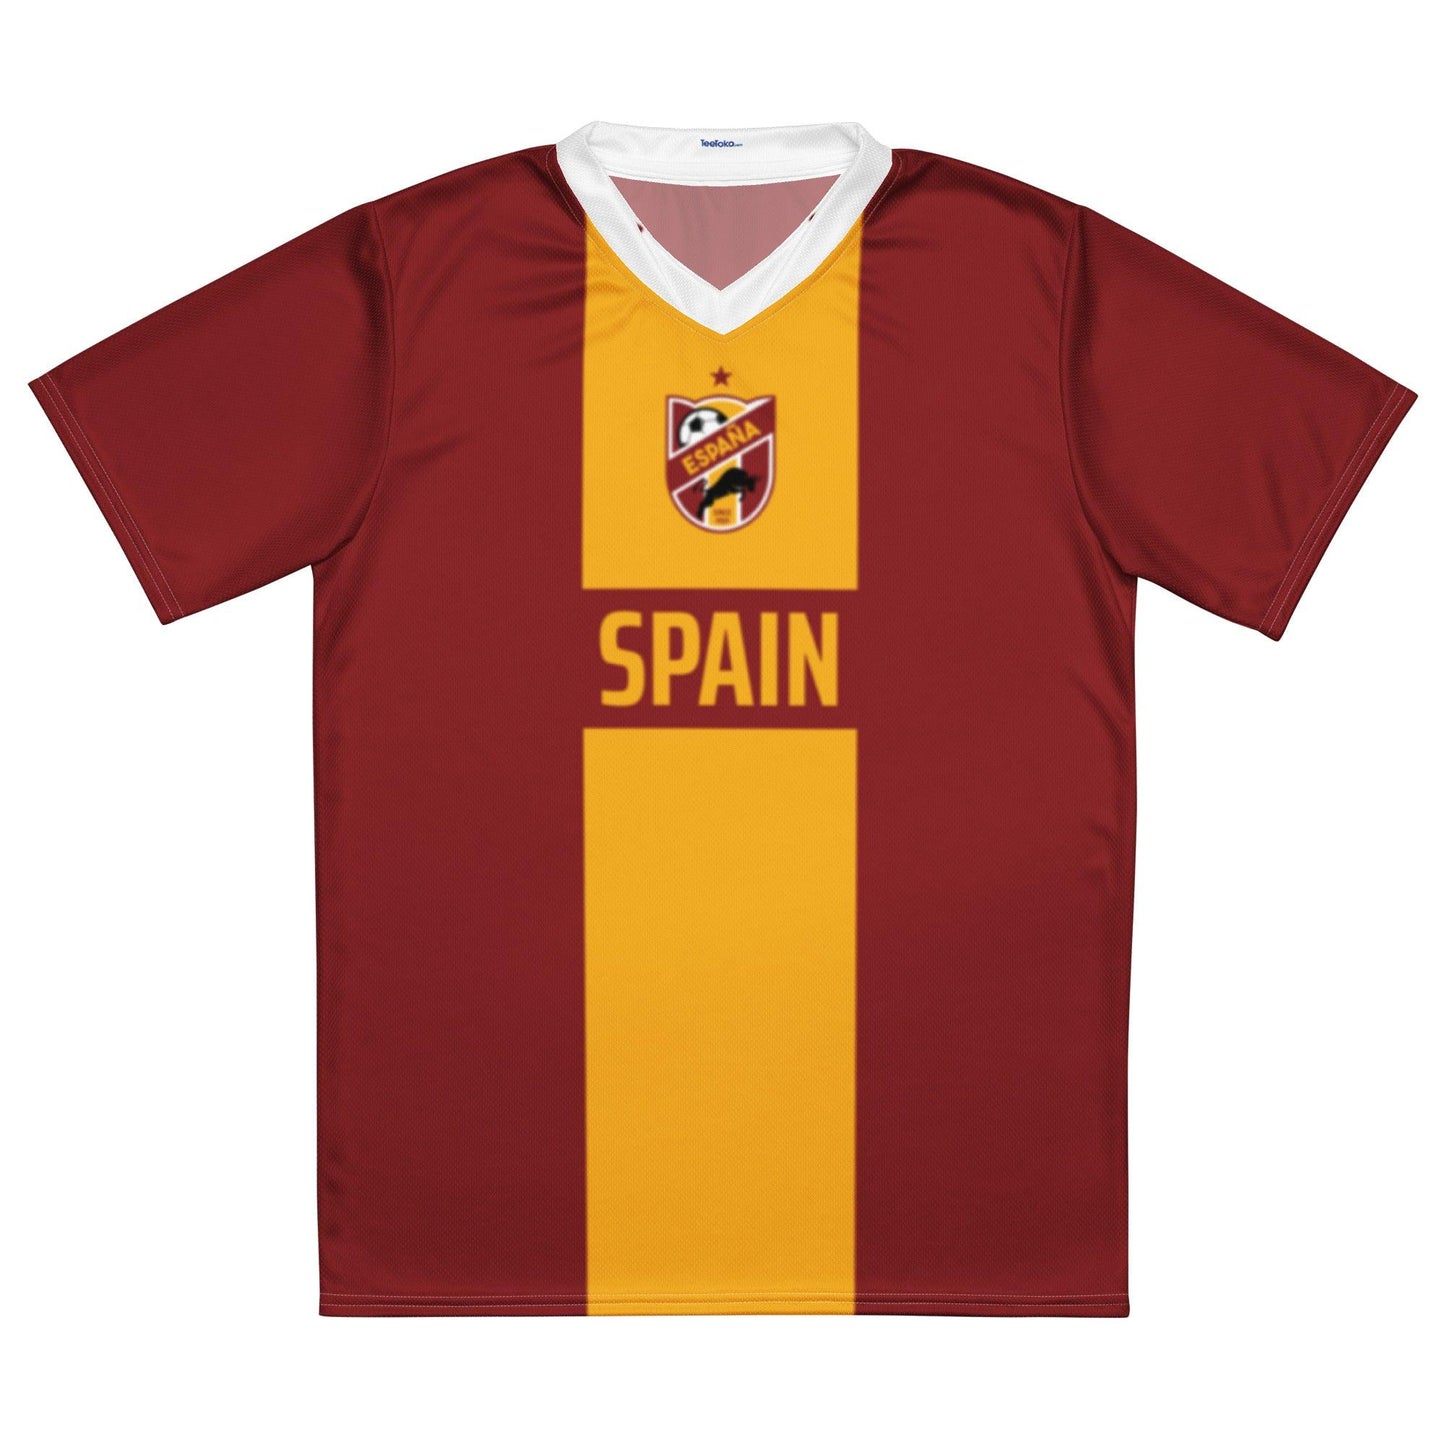 Klassiek Rood EK Voetbalshirt - Spanje Thuisshirt voor volwassenen